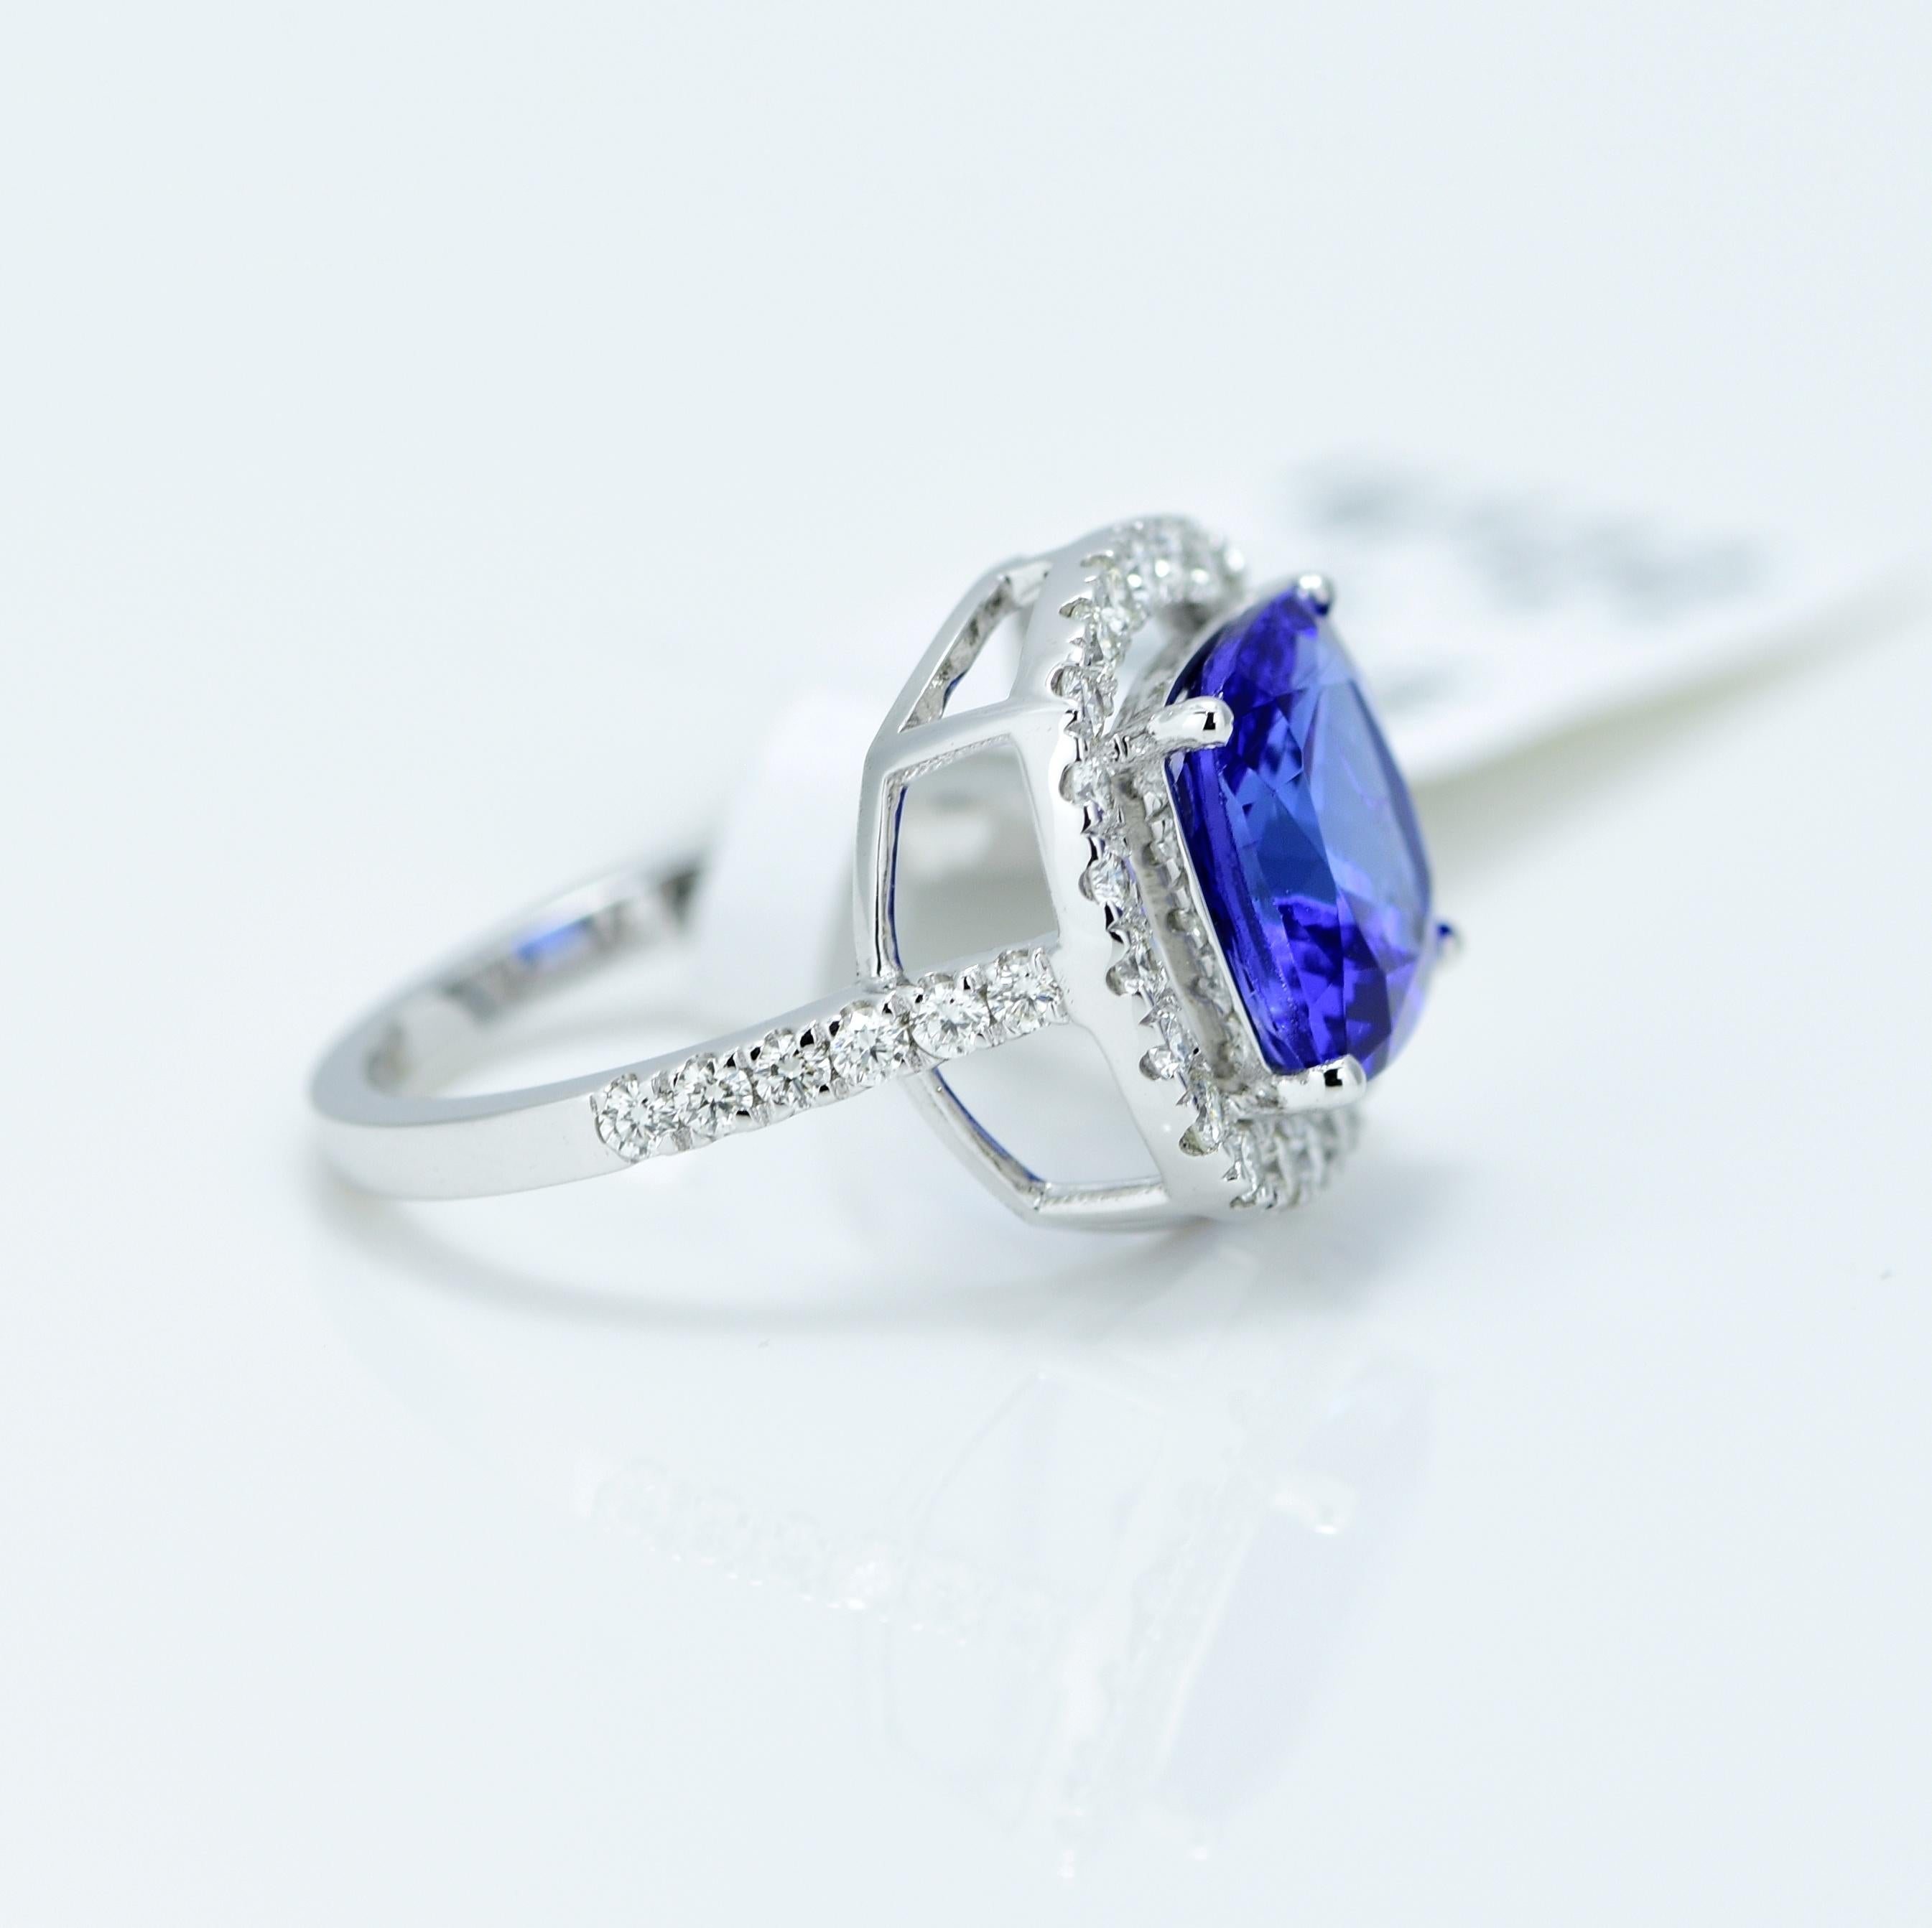 Stunning Violetish Blue Tanzanite and Diamond halo ring.

Centre Stone - Natural Tanzanite, 
Centre Stone Weight - 3.41 Carat, 
Centre Stone Shape & Cut - Cushion Step Cut
 
Total Number of Diamonds - 34, 
Diamonds Carat Weight - 0.56 carat
Diamond